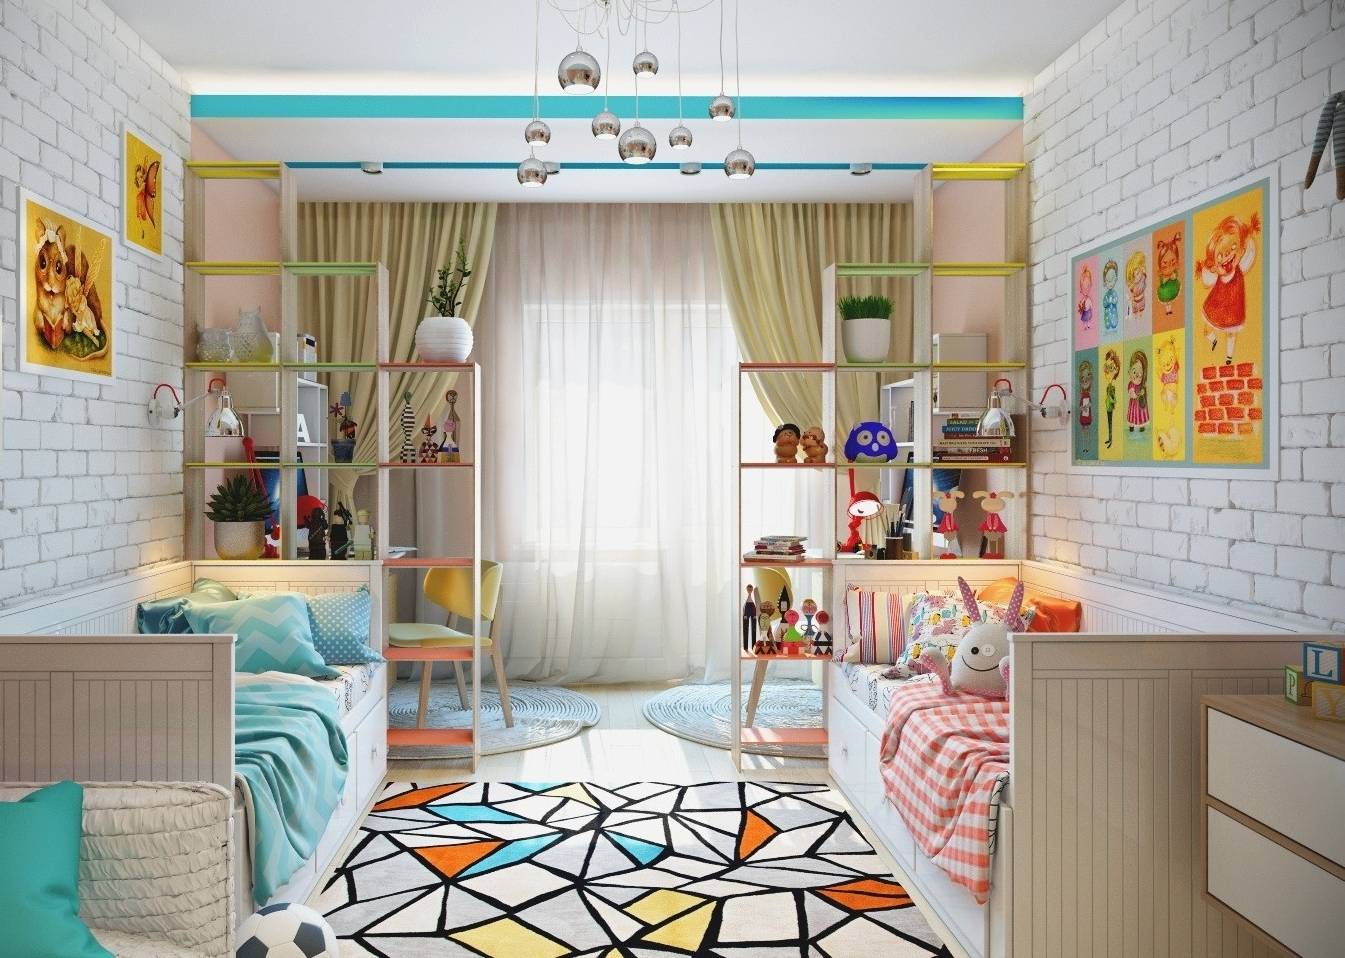 Дизайн интерьера комнаты для ребенка: варианты, подходы, идеи